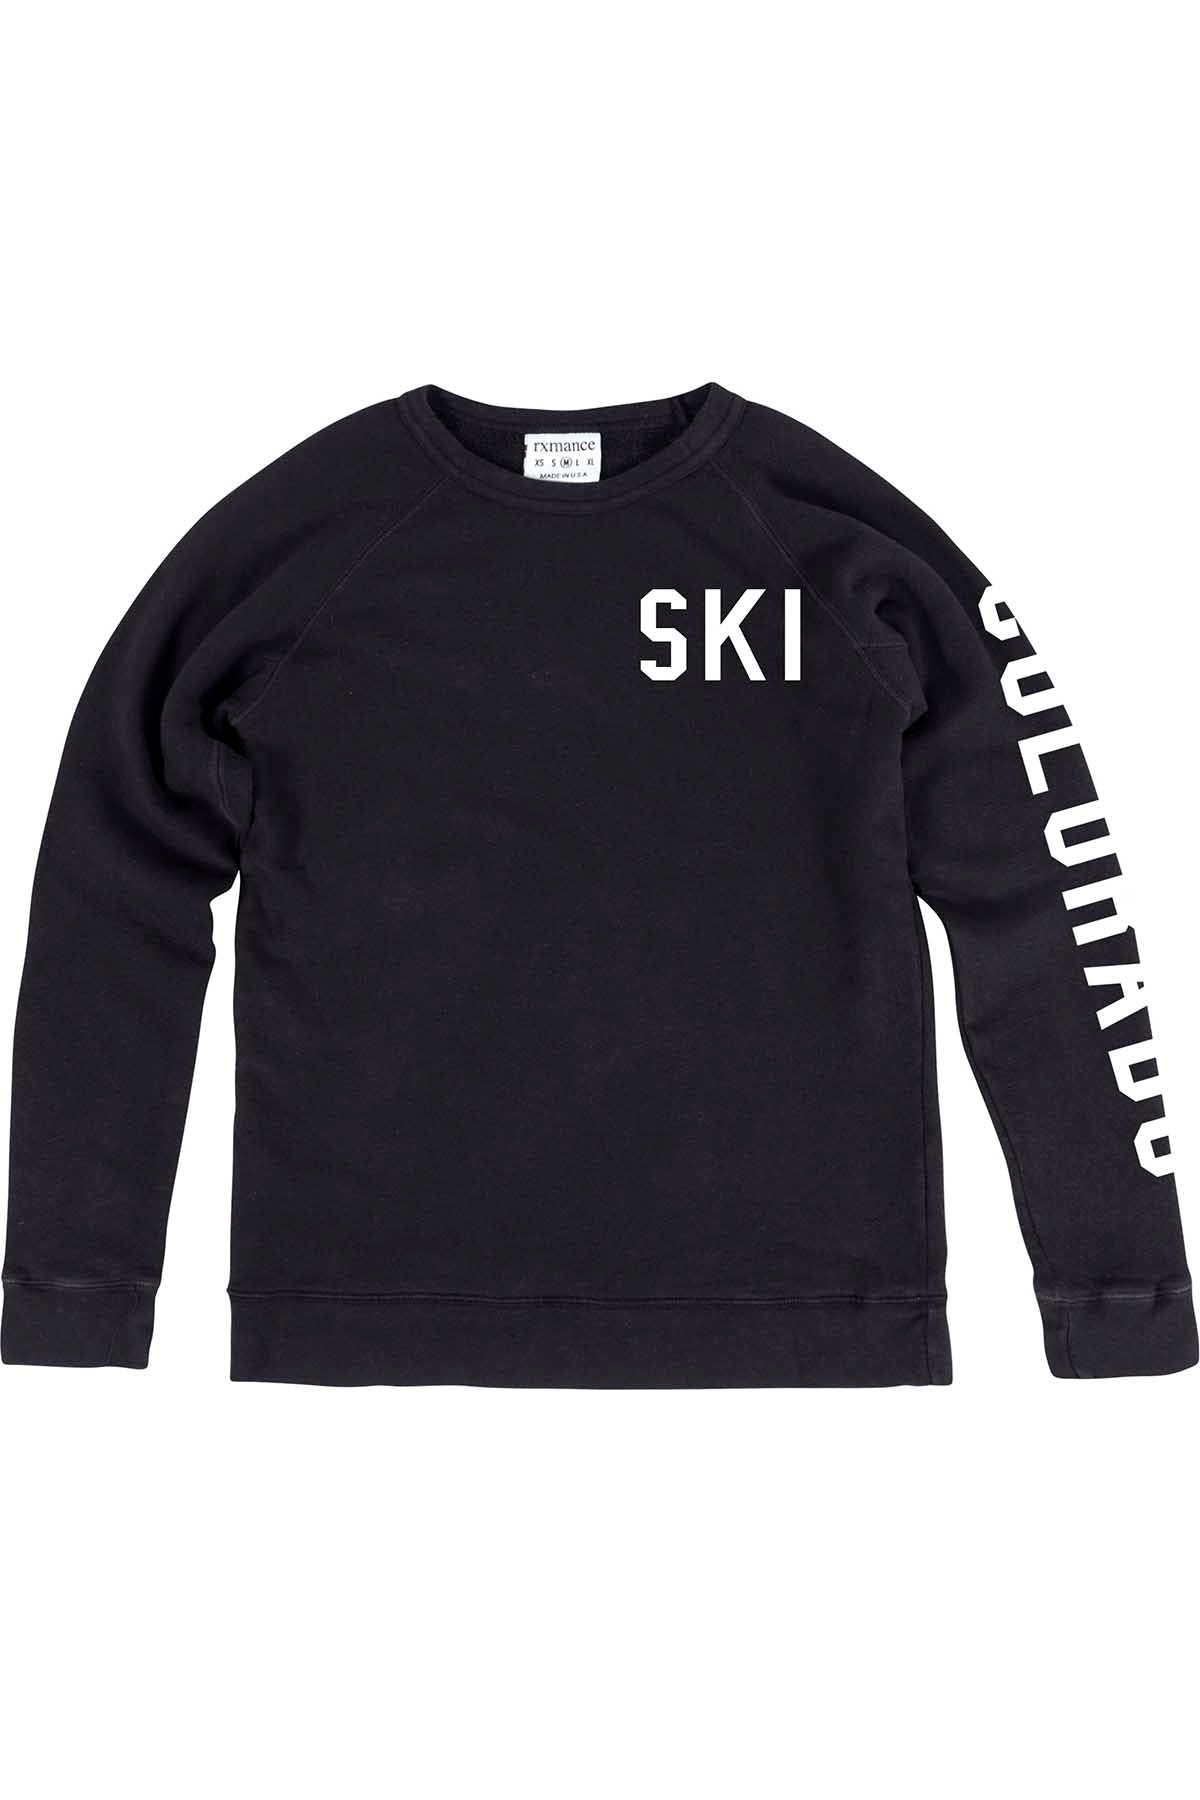 Rxmance Unisex Black Ski Crew Sweatshirt